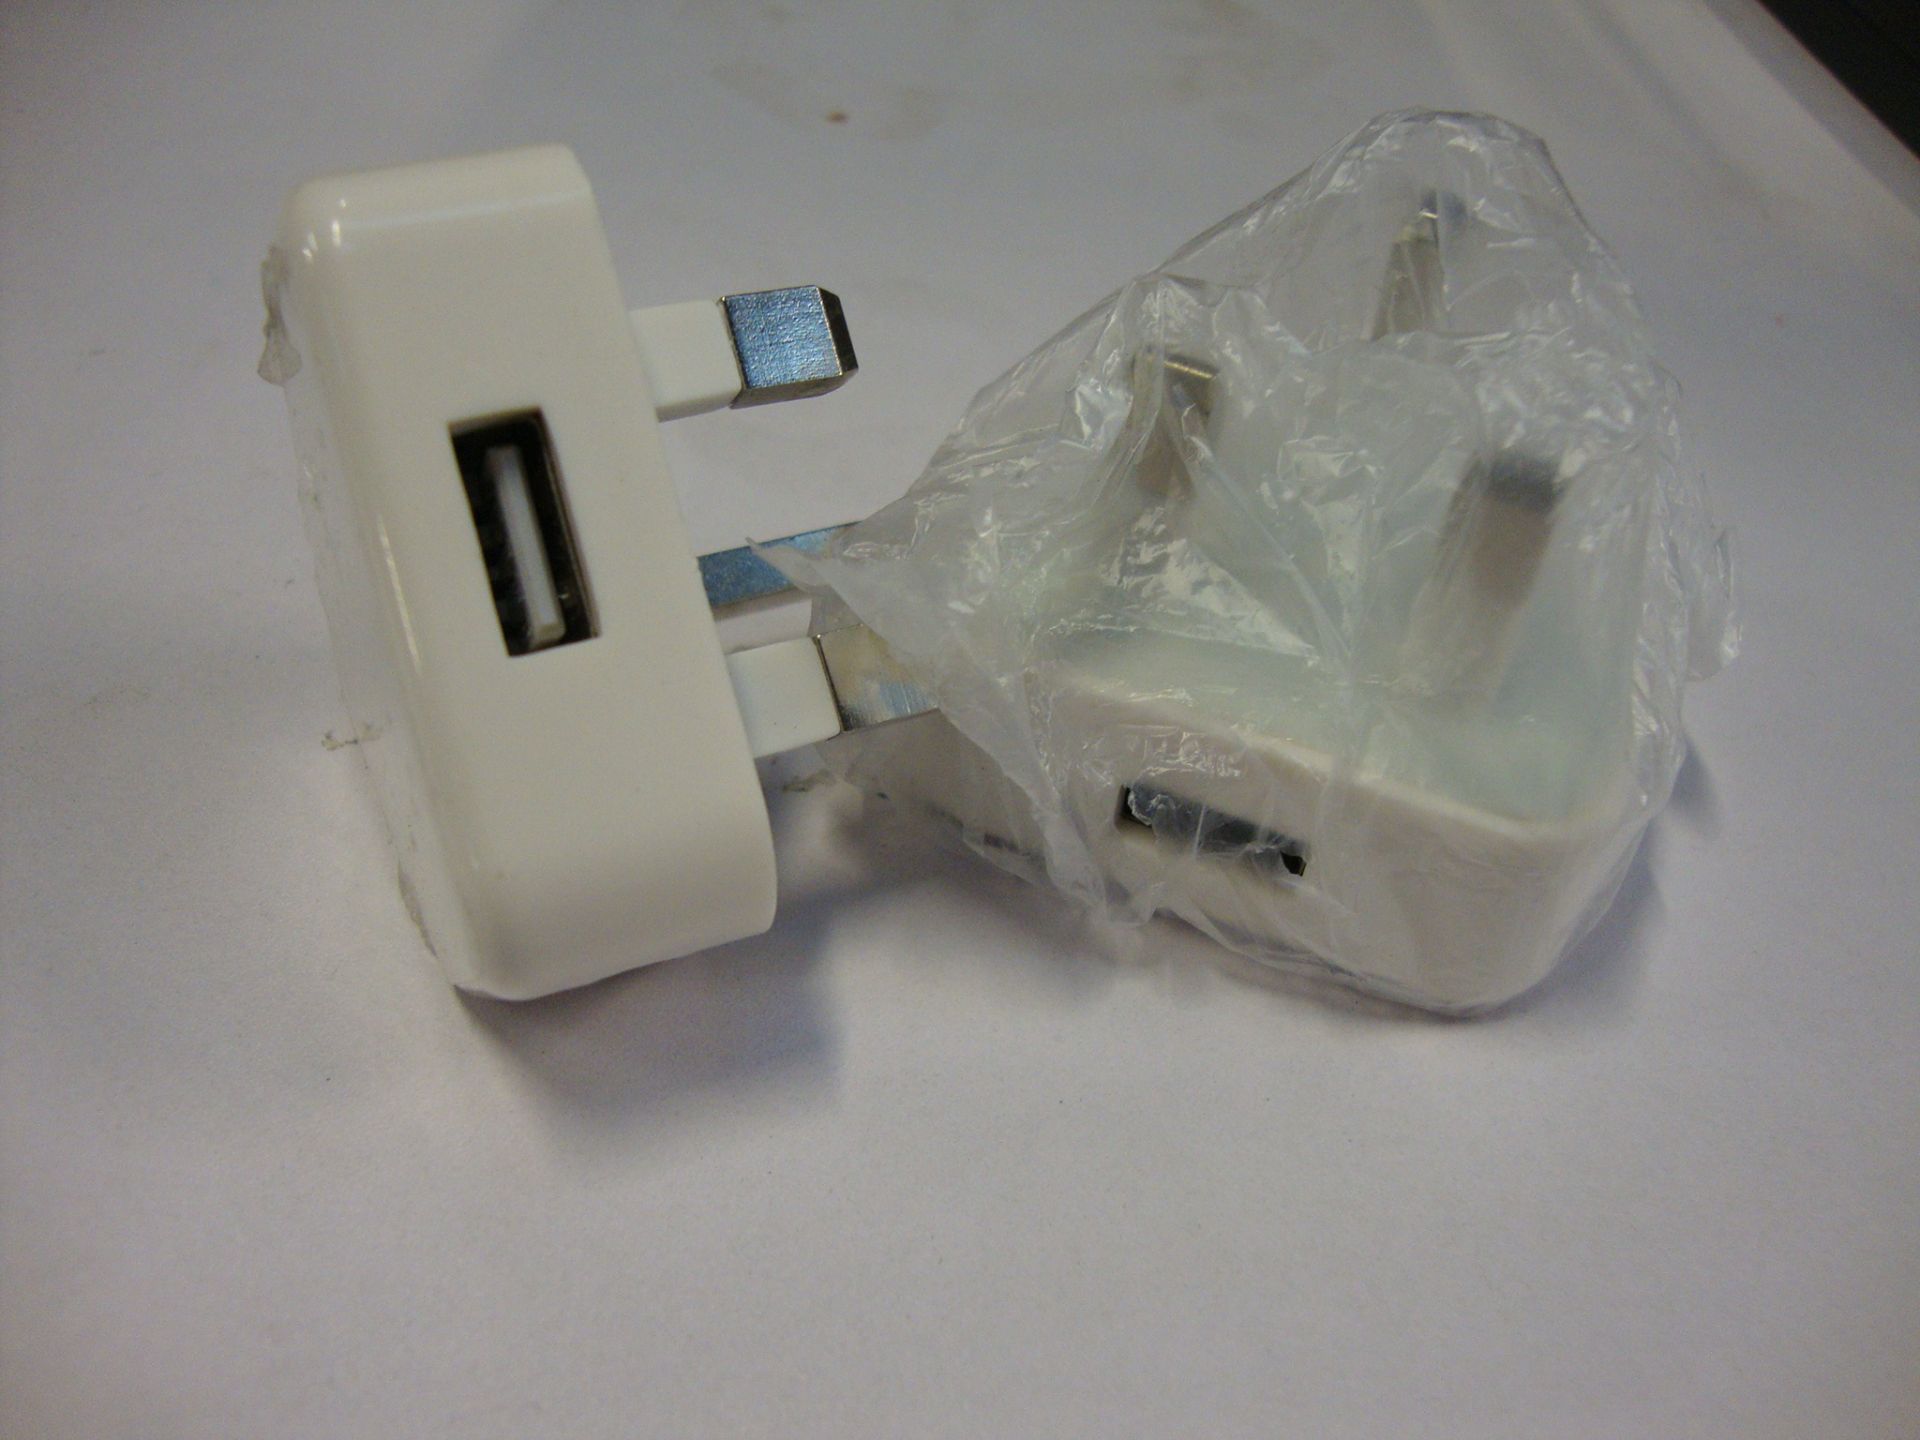 100 off model A1299 5v/1a USB chargers, input 100-240v, 54/60Hz - Image 4 of 4